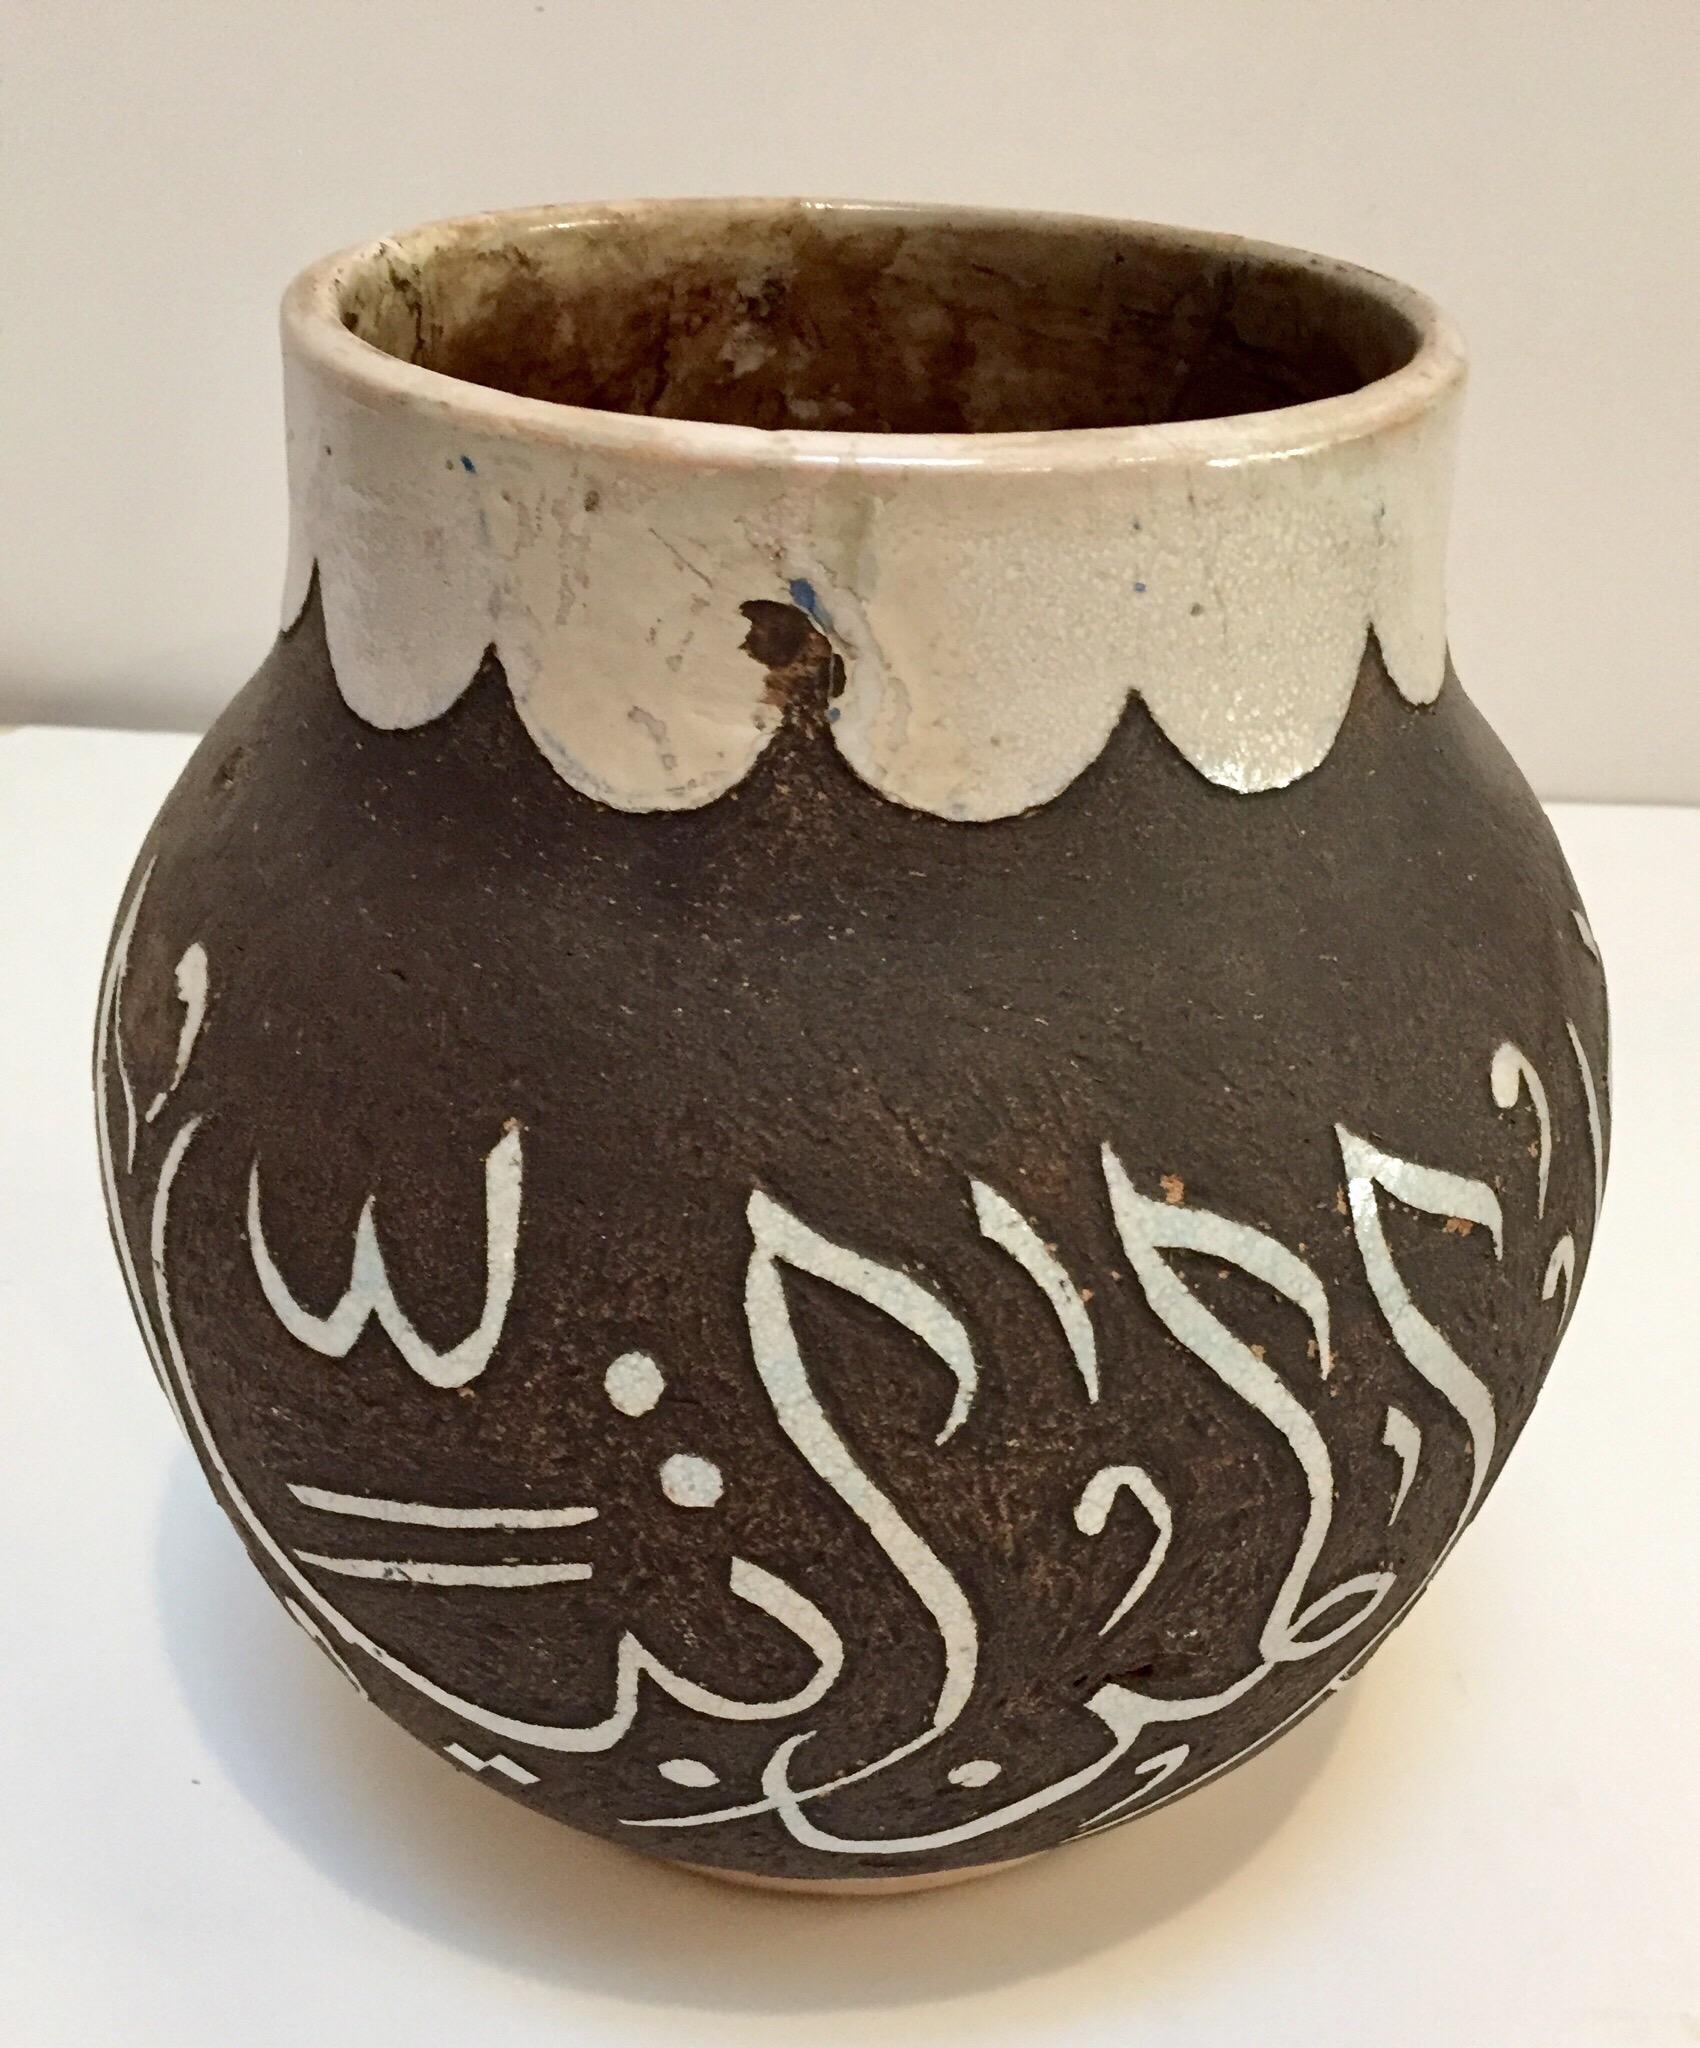 20th Century Moroccan Ceramic Vase with Arabic Calligraphy